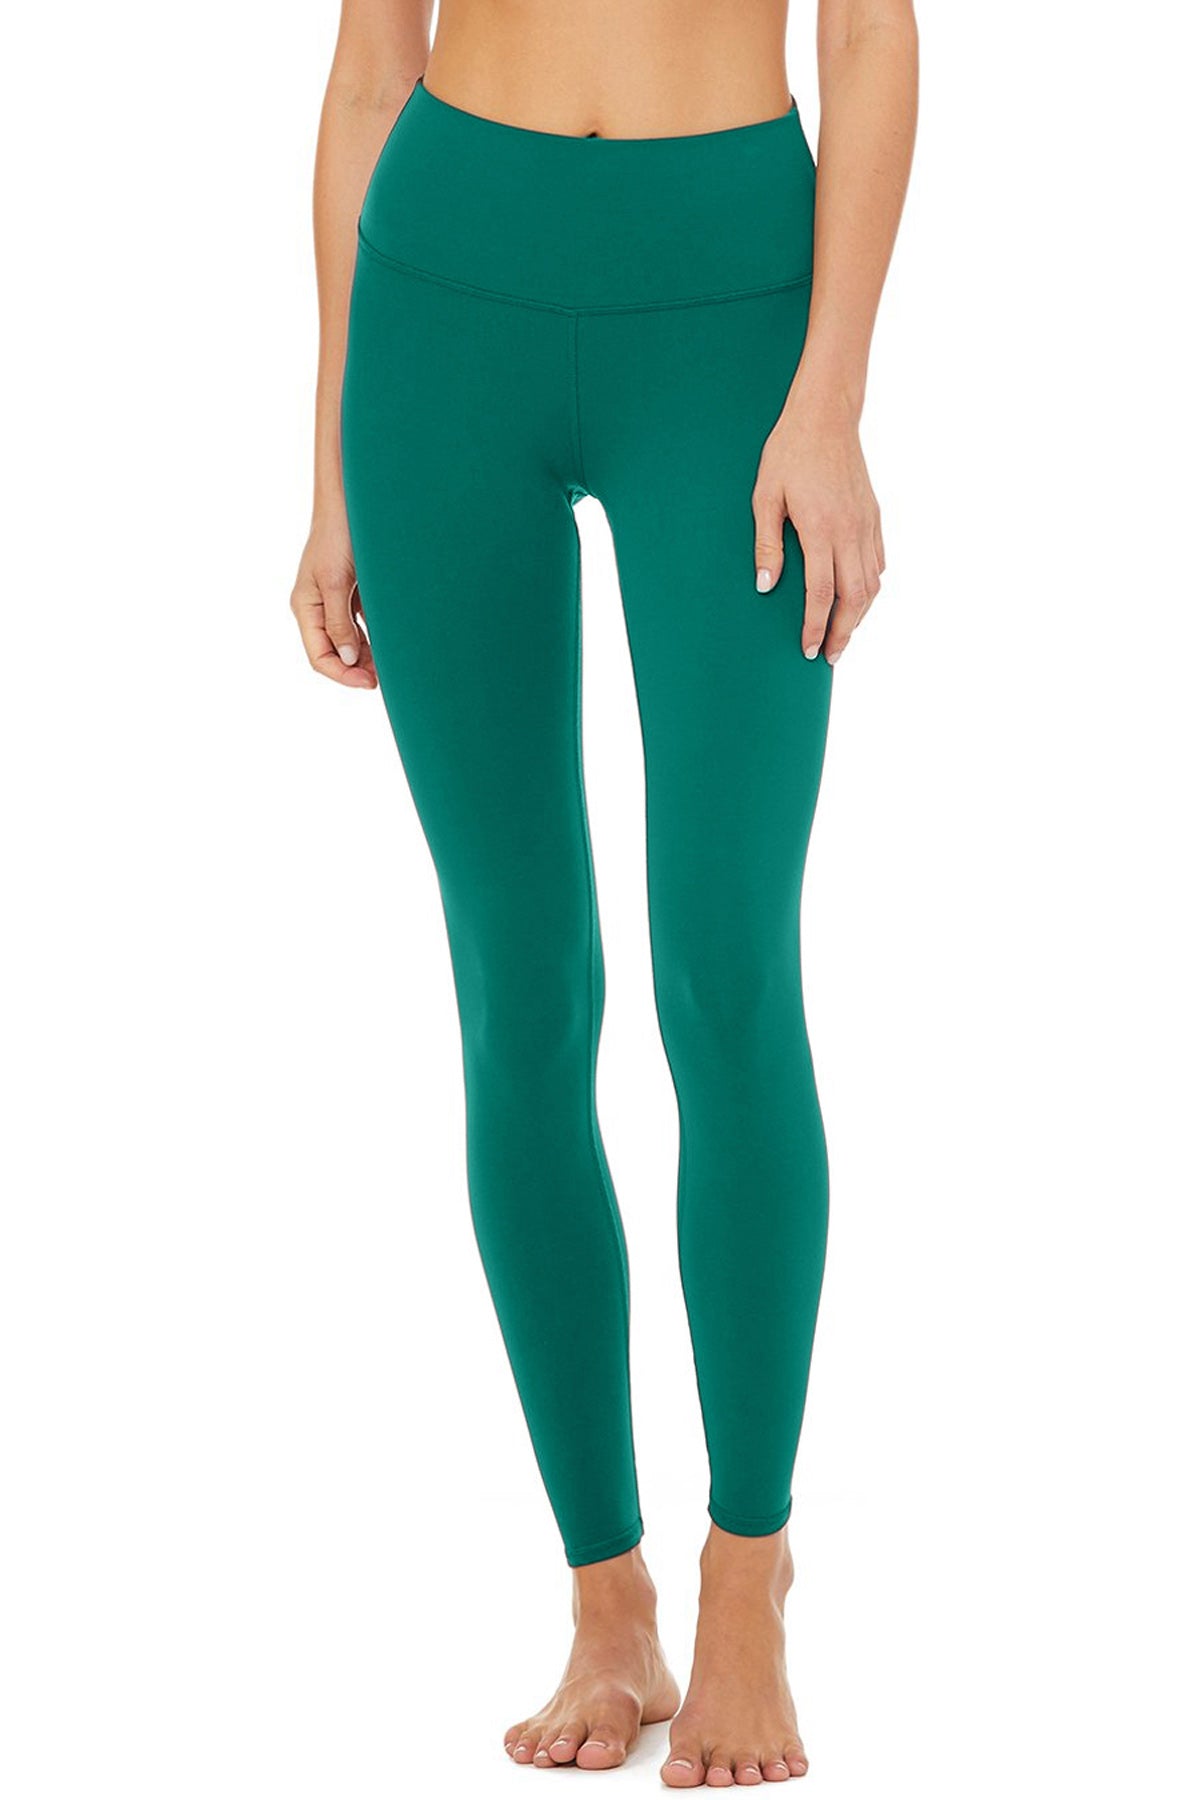 Jade Green UV 50+ Lucy Performance Leggings Yoga Pants - Women - Pineapple Clothing